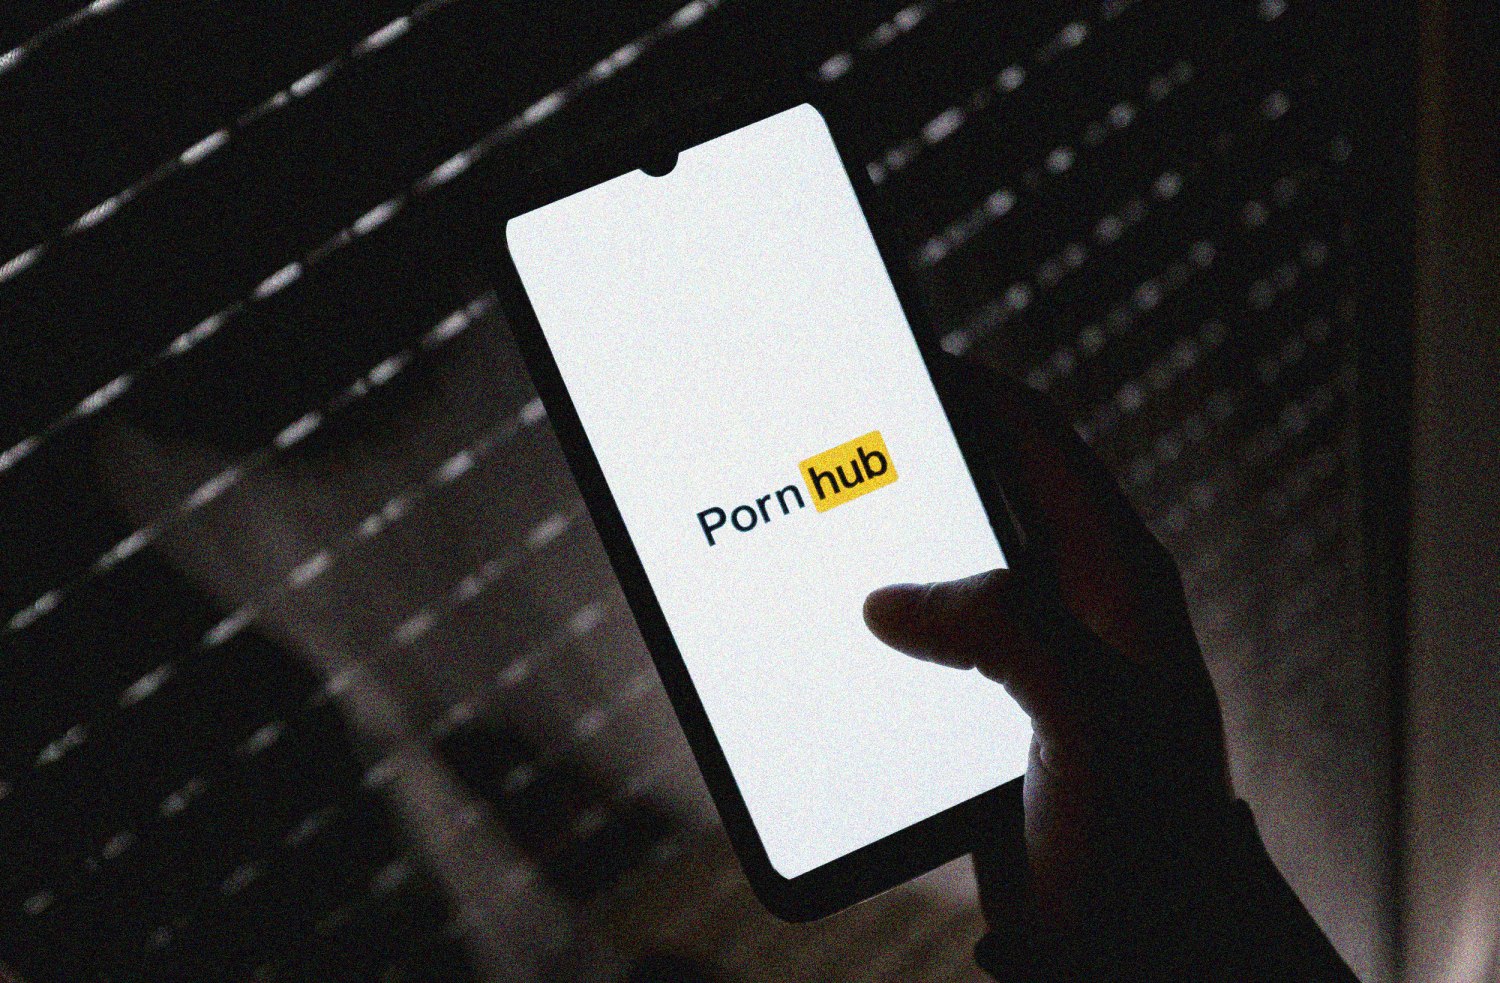 Pormhob - Meet Pornhub's new owner: Ethical Capital Partners